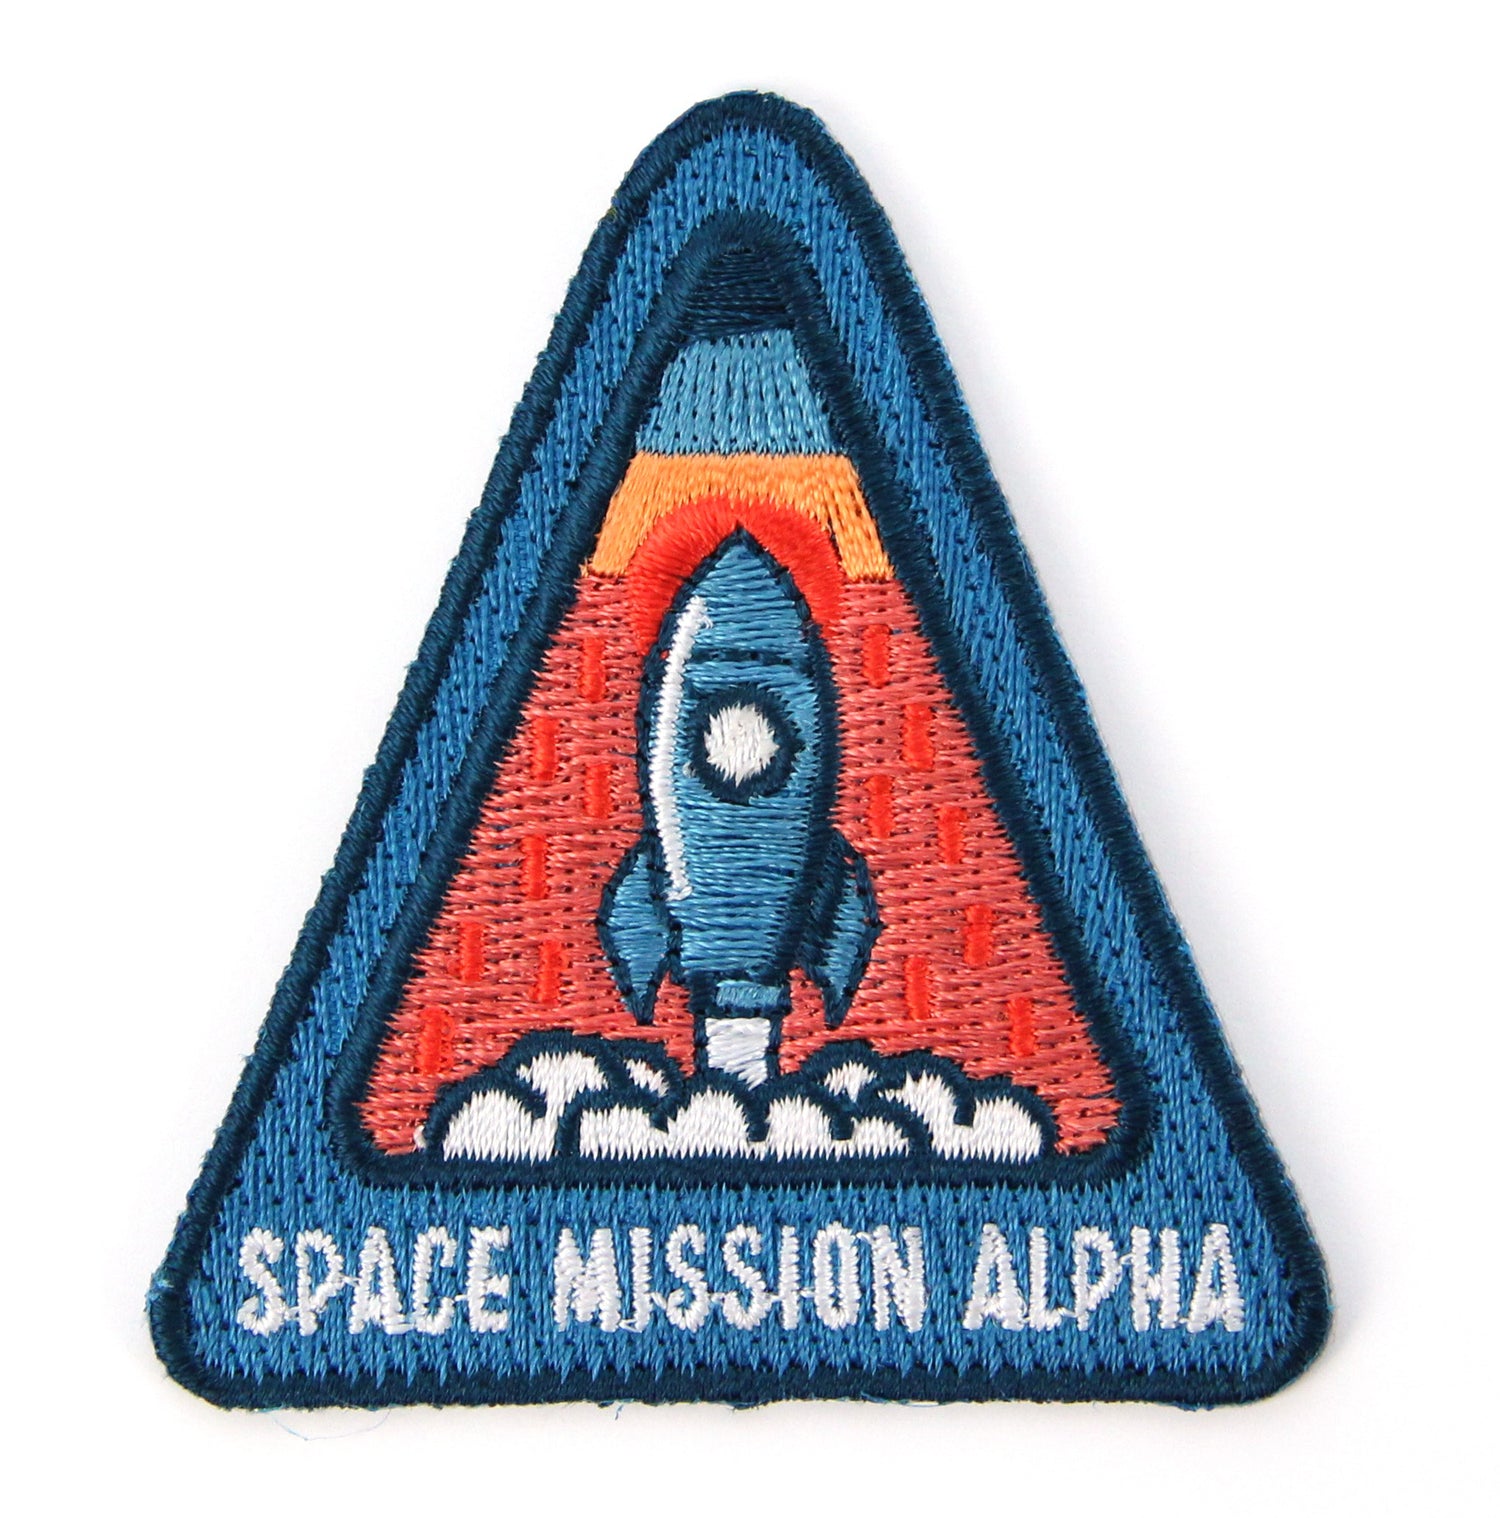 Space Mission Alpha Patch